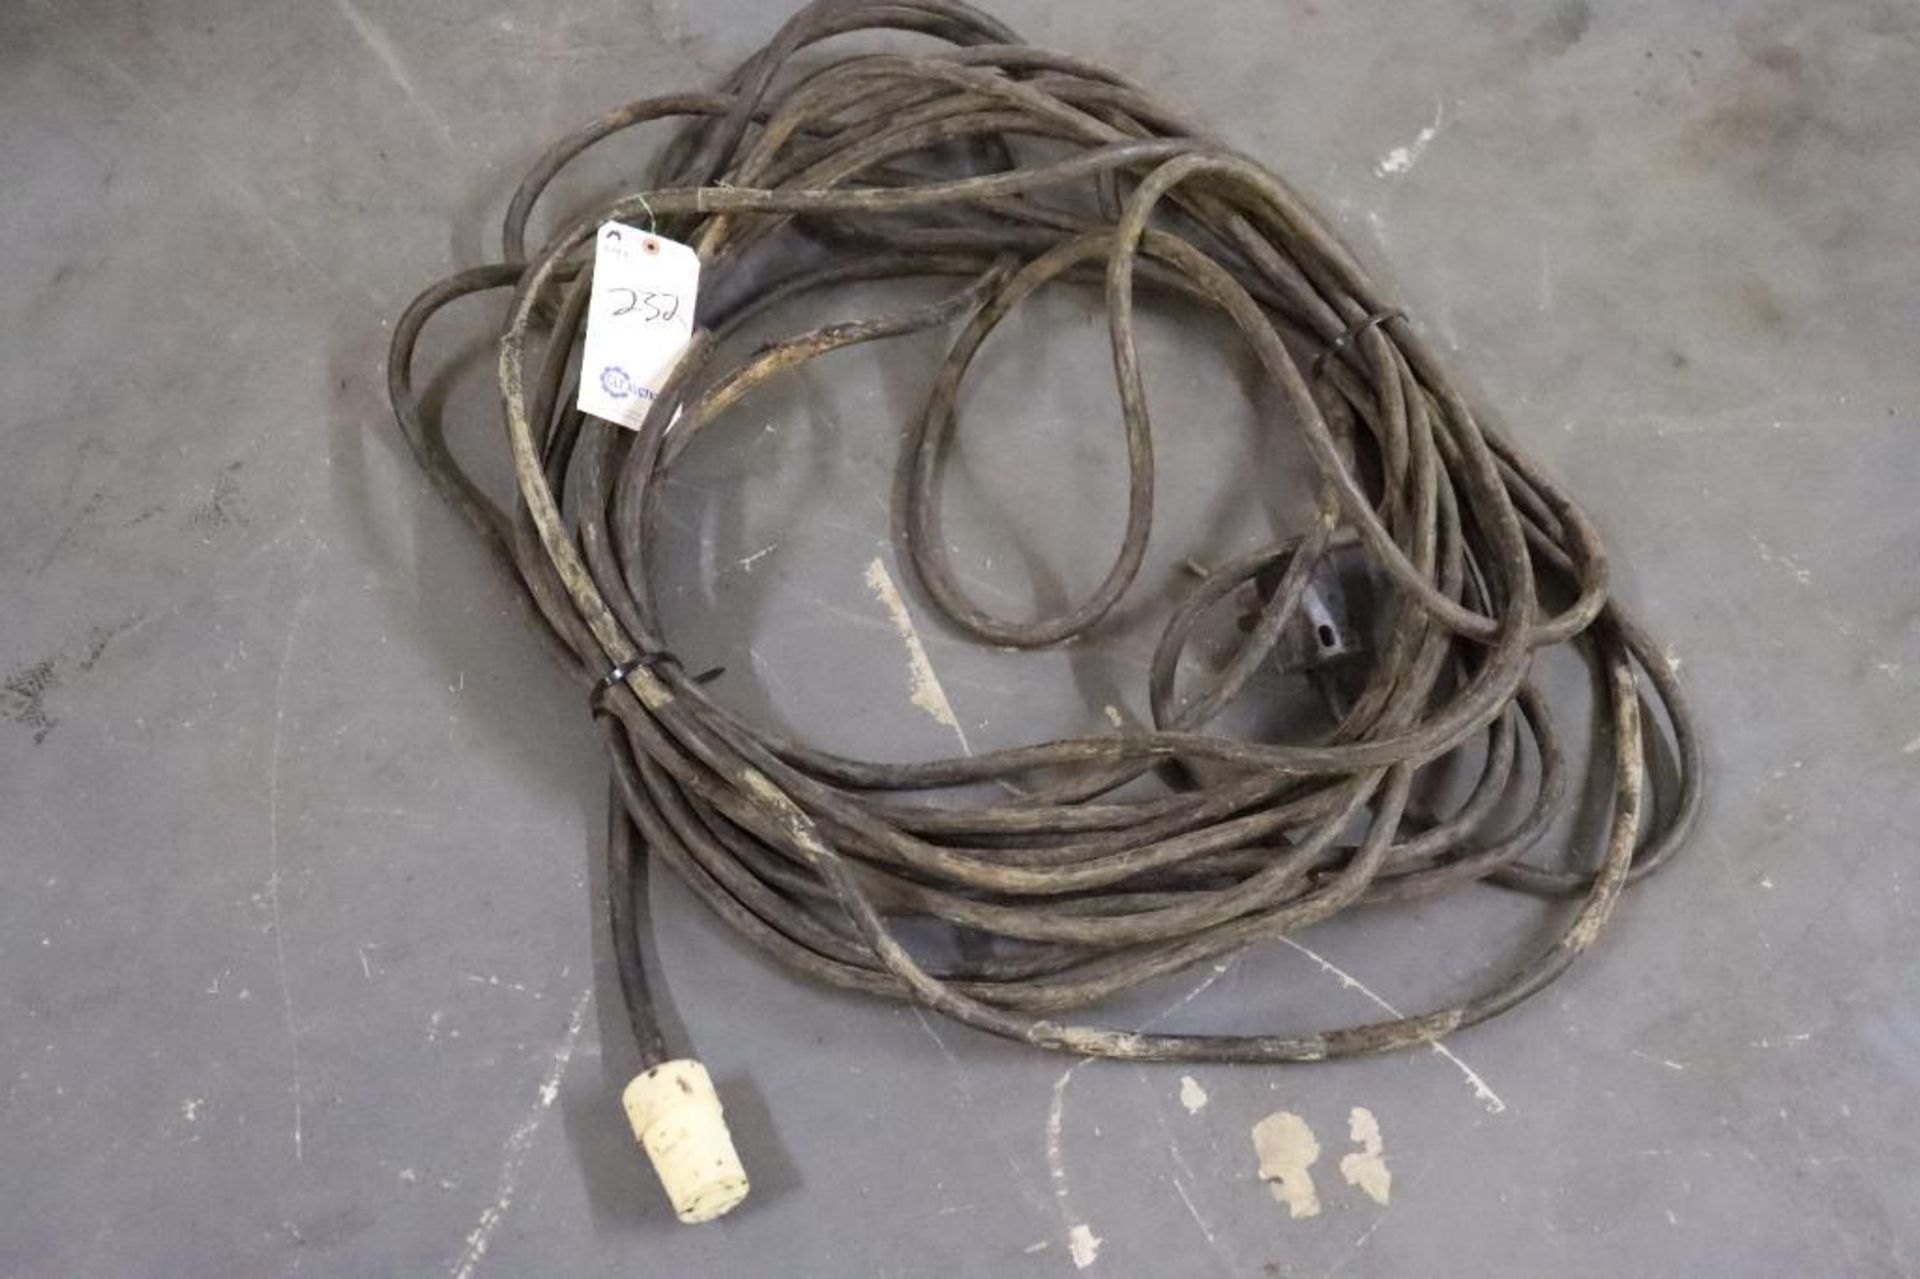 220V extension cord